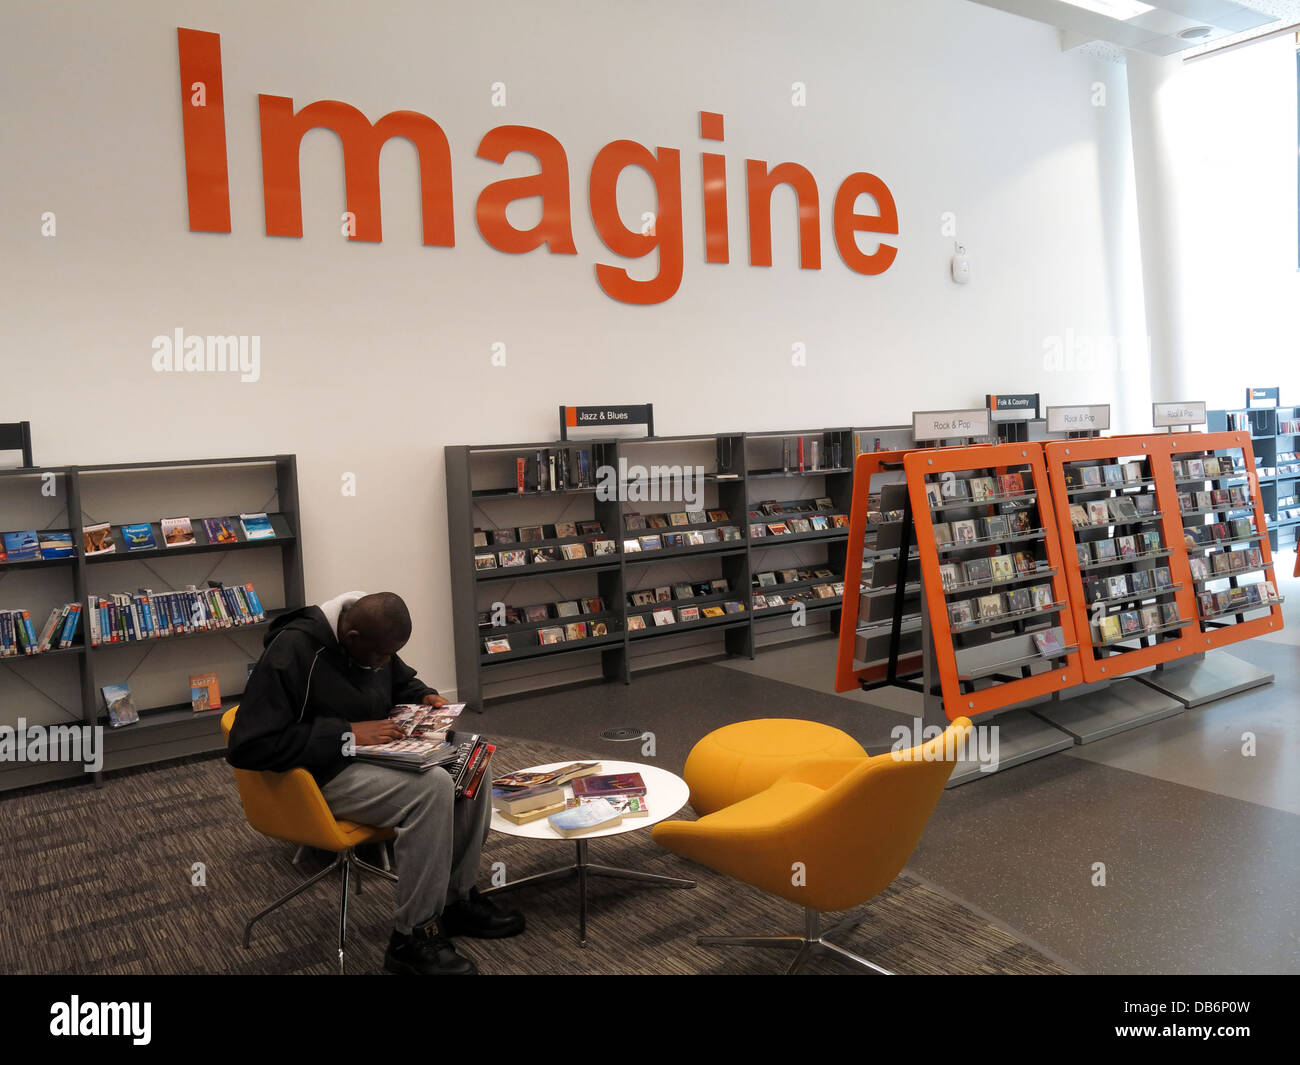 Imagine John Lennon Song - Liverpool Central Library, books unlock the imagination, Merseyside, England, UK Stock Photo